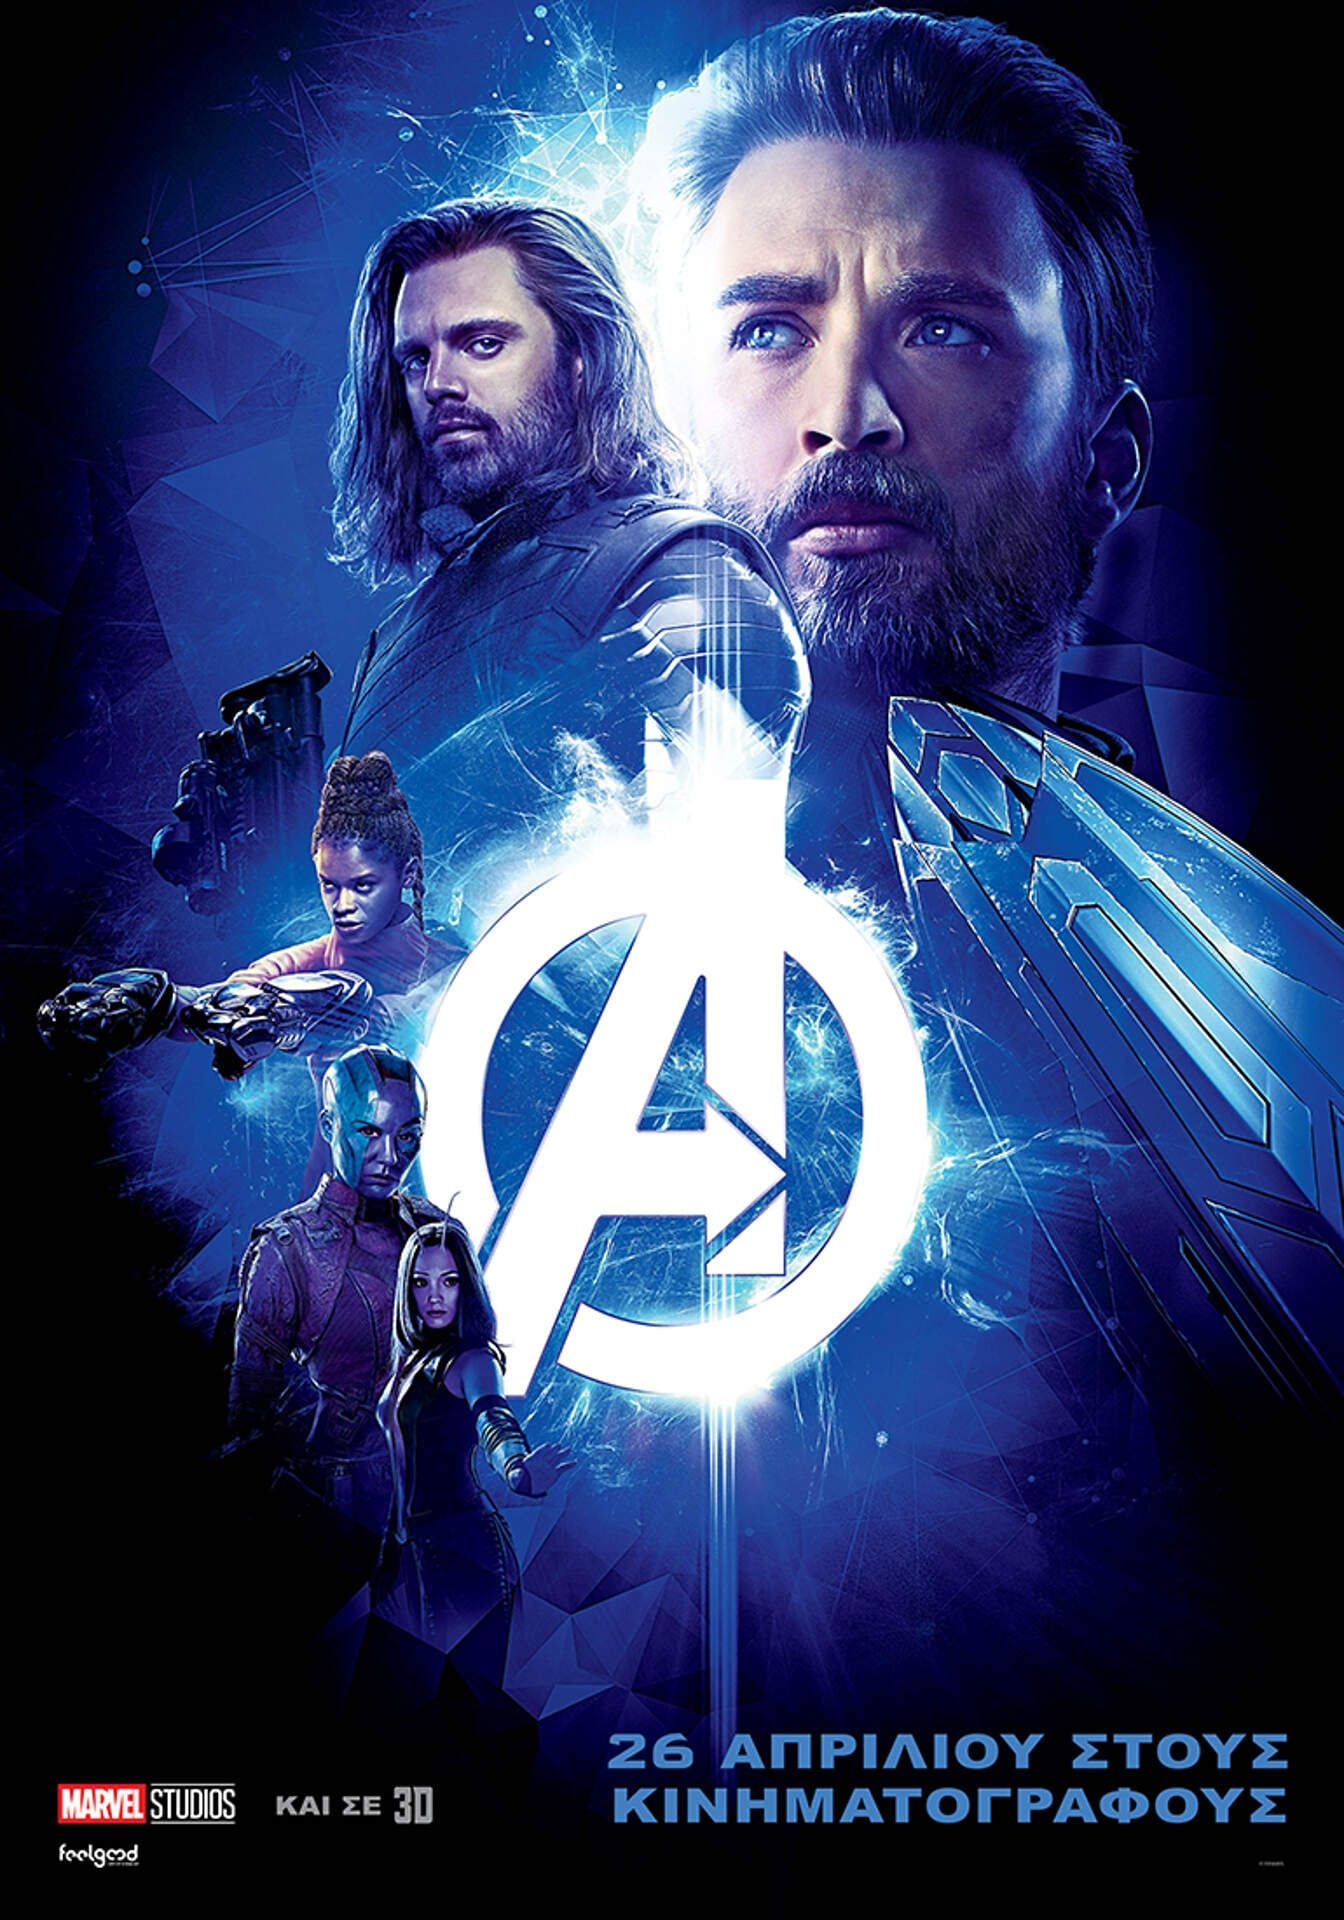 Avengers: Infinity War